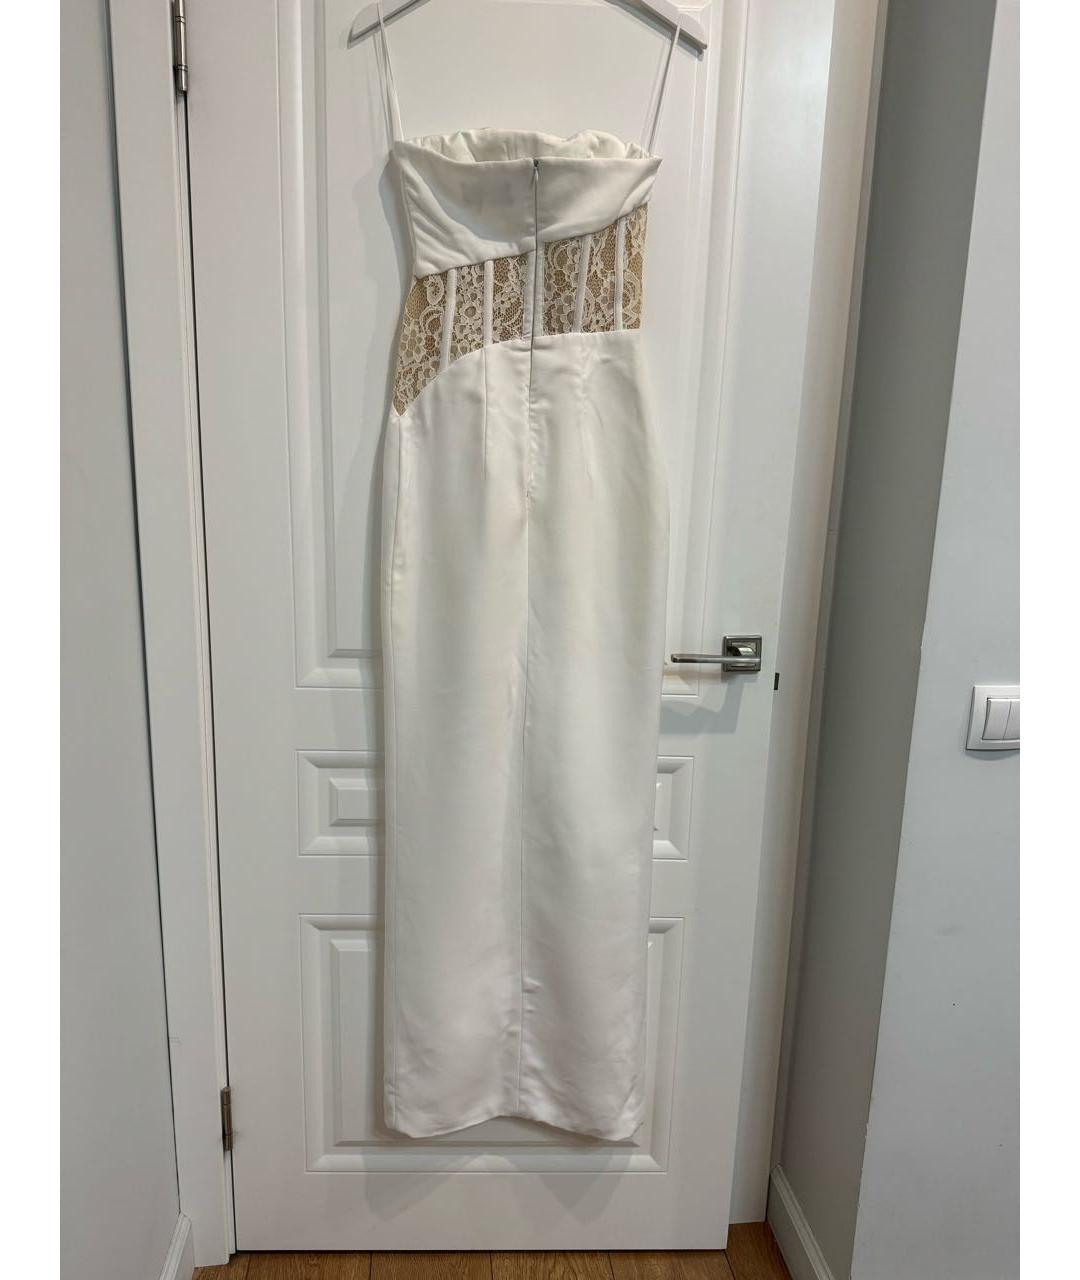 RASARIO Белое свадебное платье, фото 3